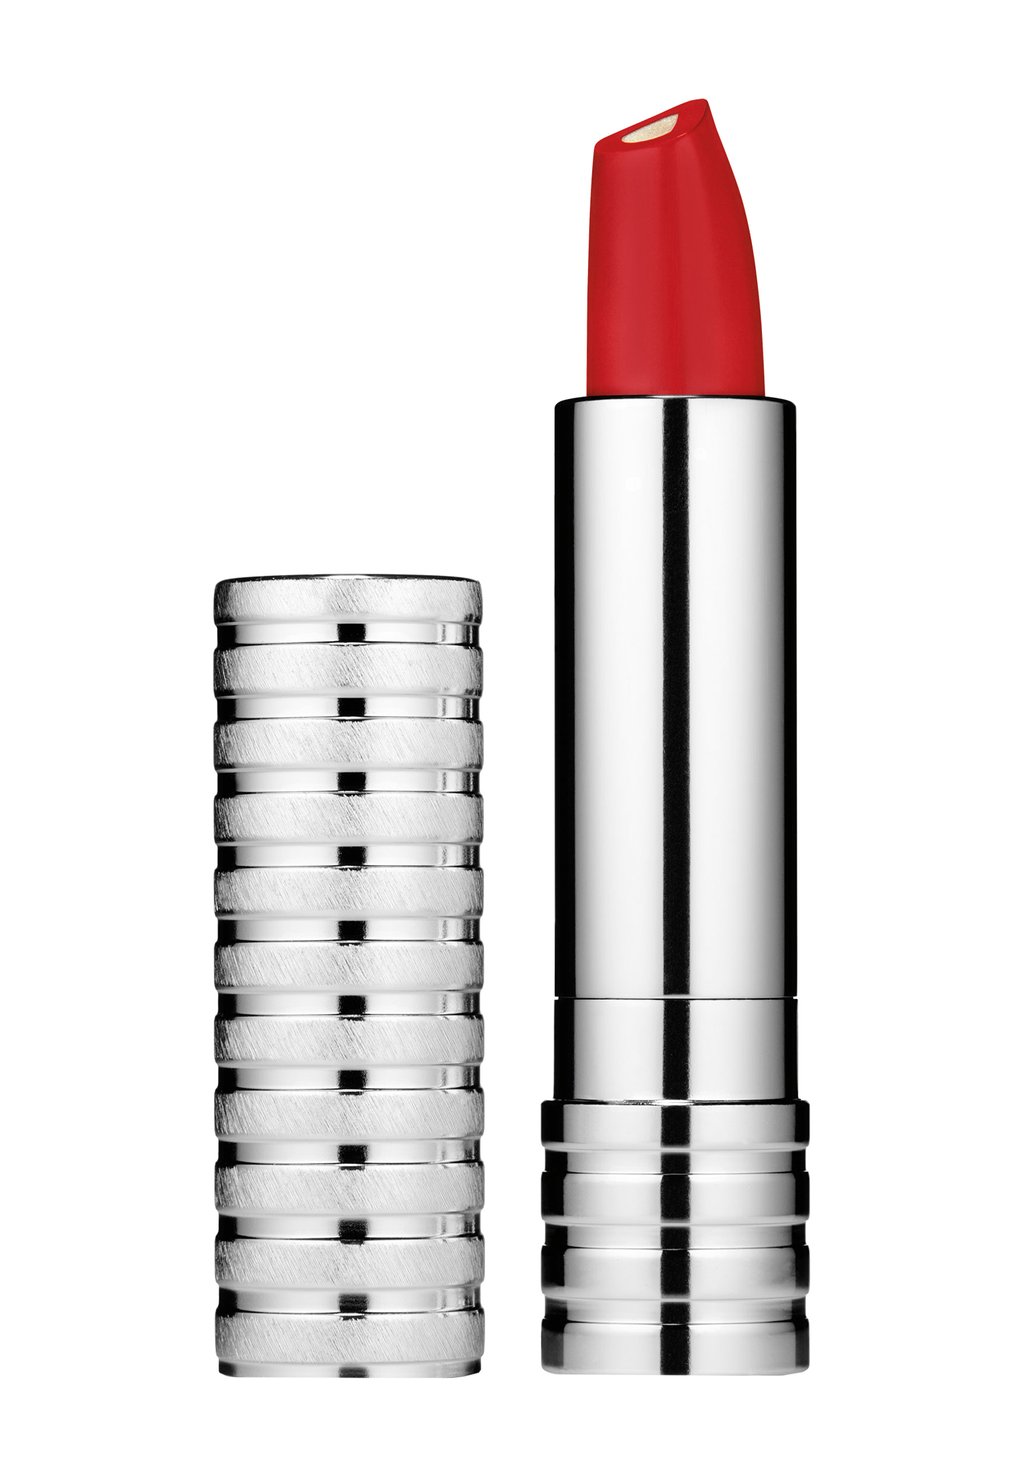 Губная помада Dramatically Different Lipstick Clinique, цвет red alert clinique dramatically different lipstick